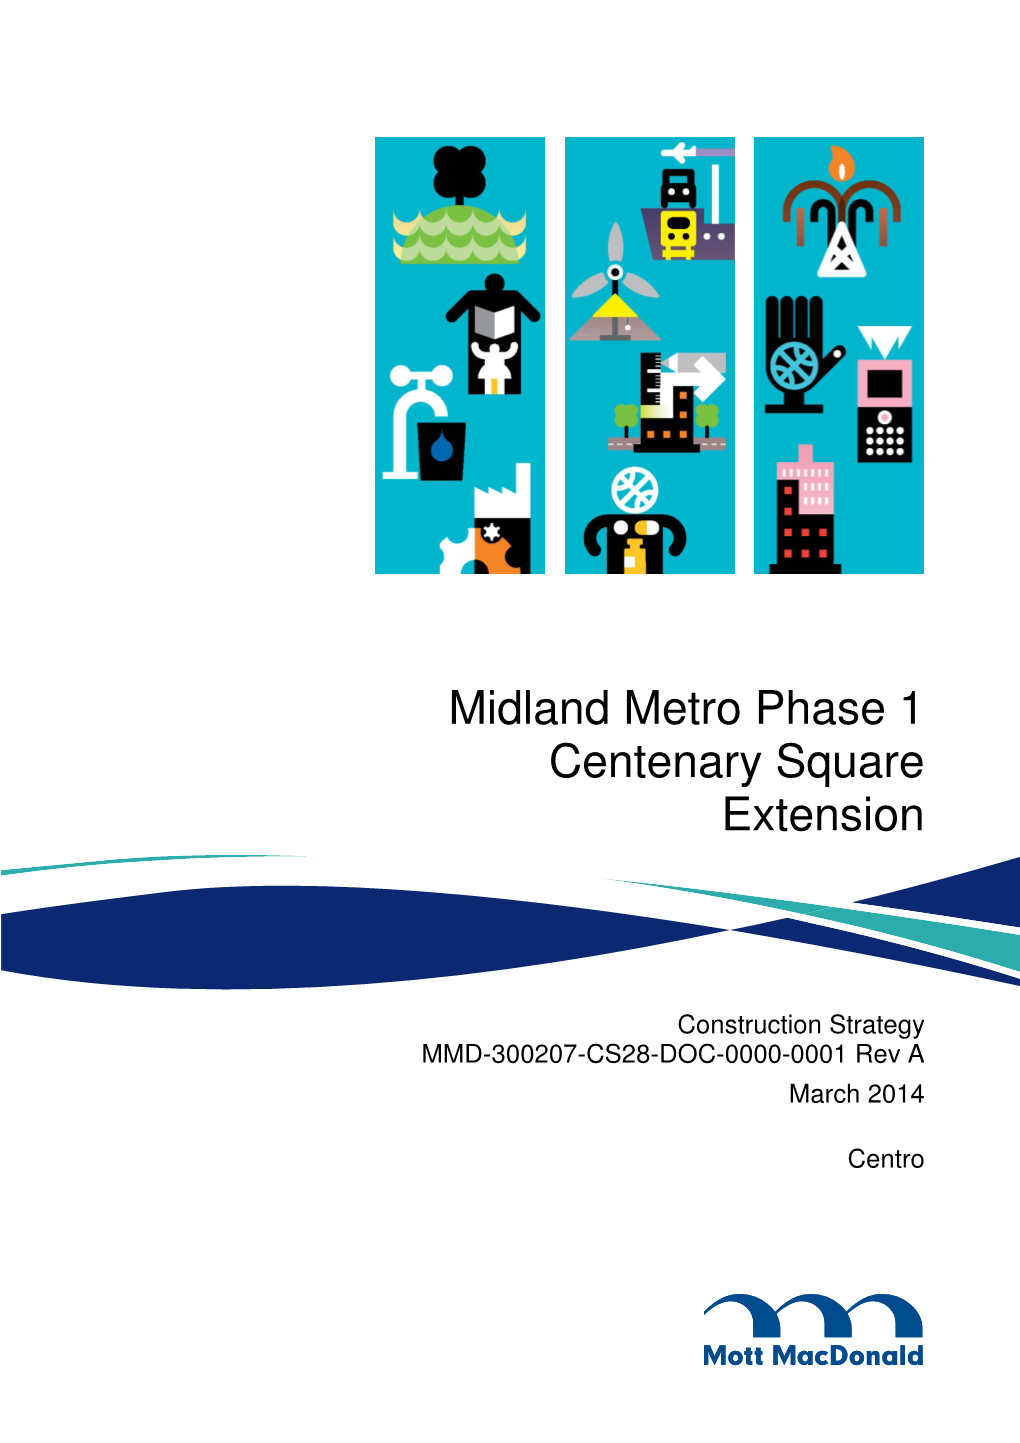 Midland Metro Phase 1 Centenary Square Extension